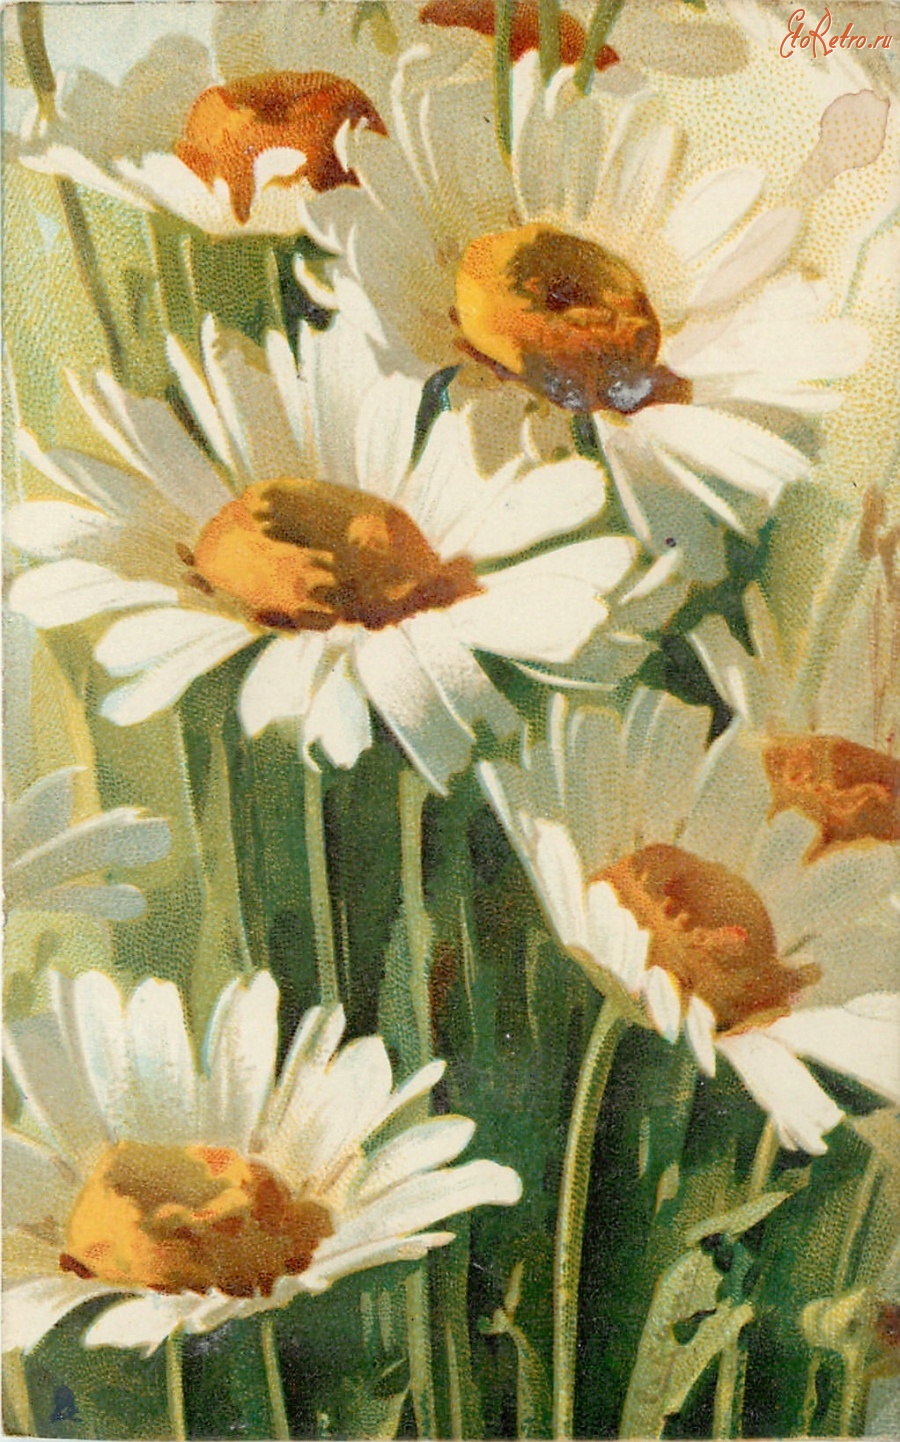 Ретро открытки - Цветы Кляйн. Белые маргаритки